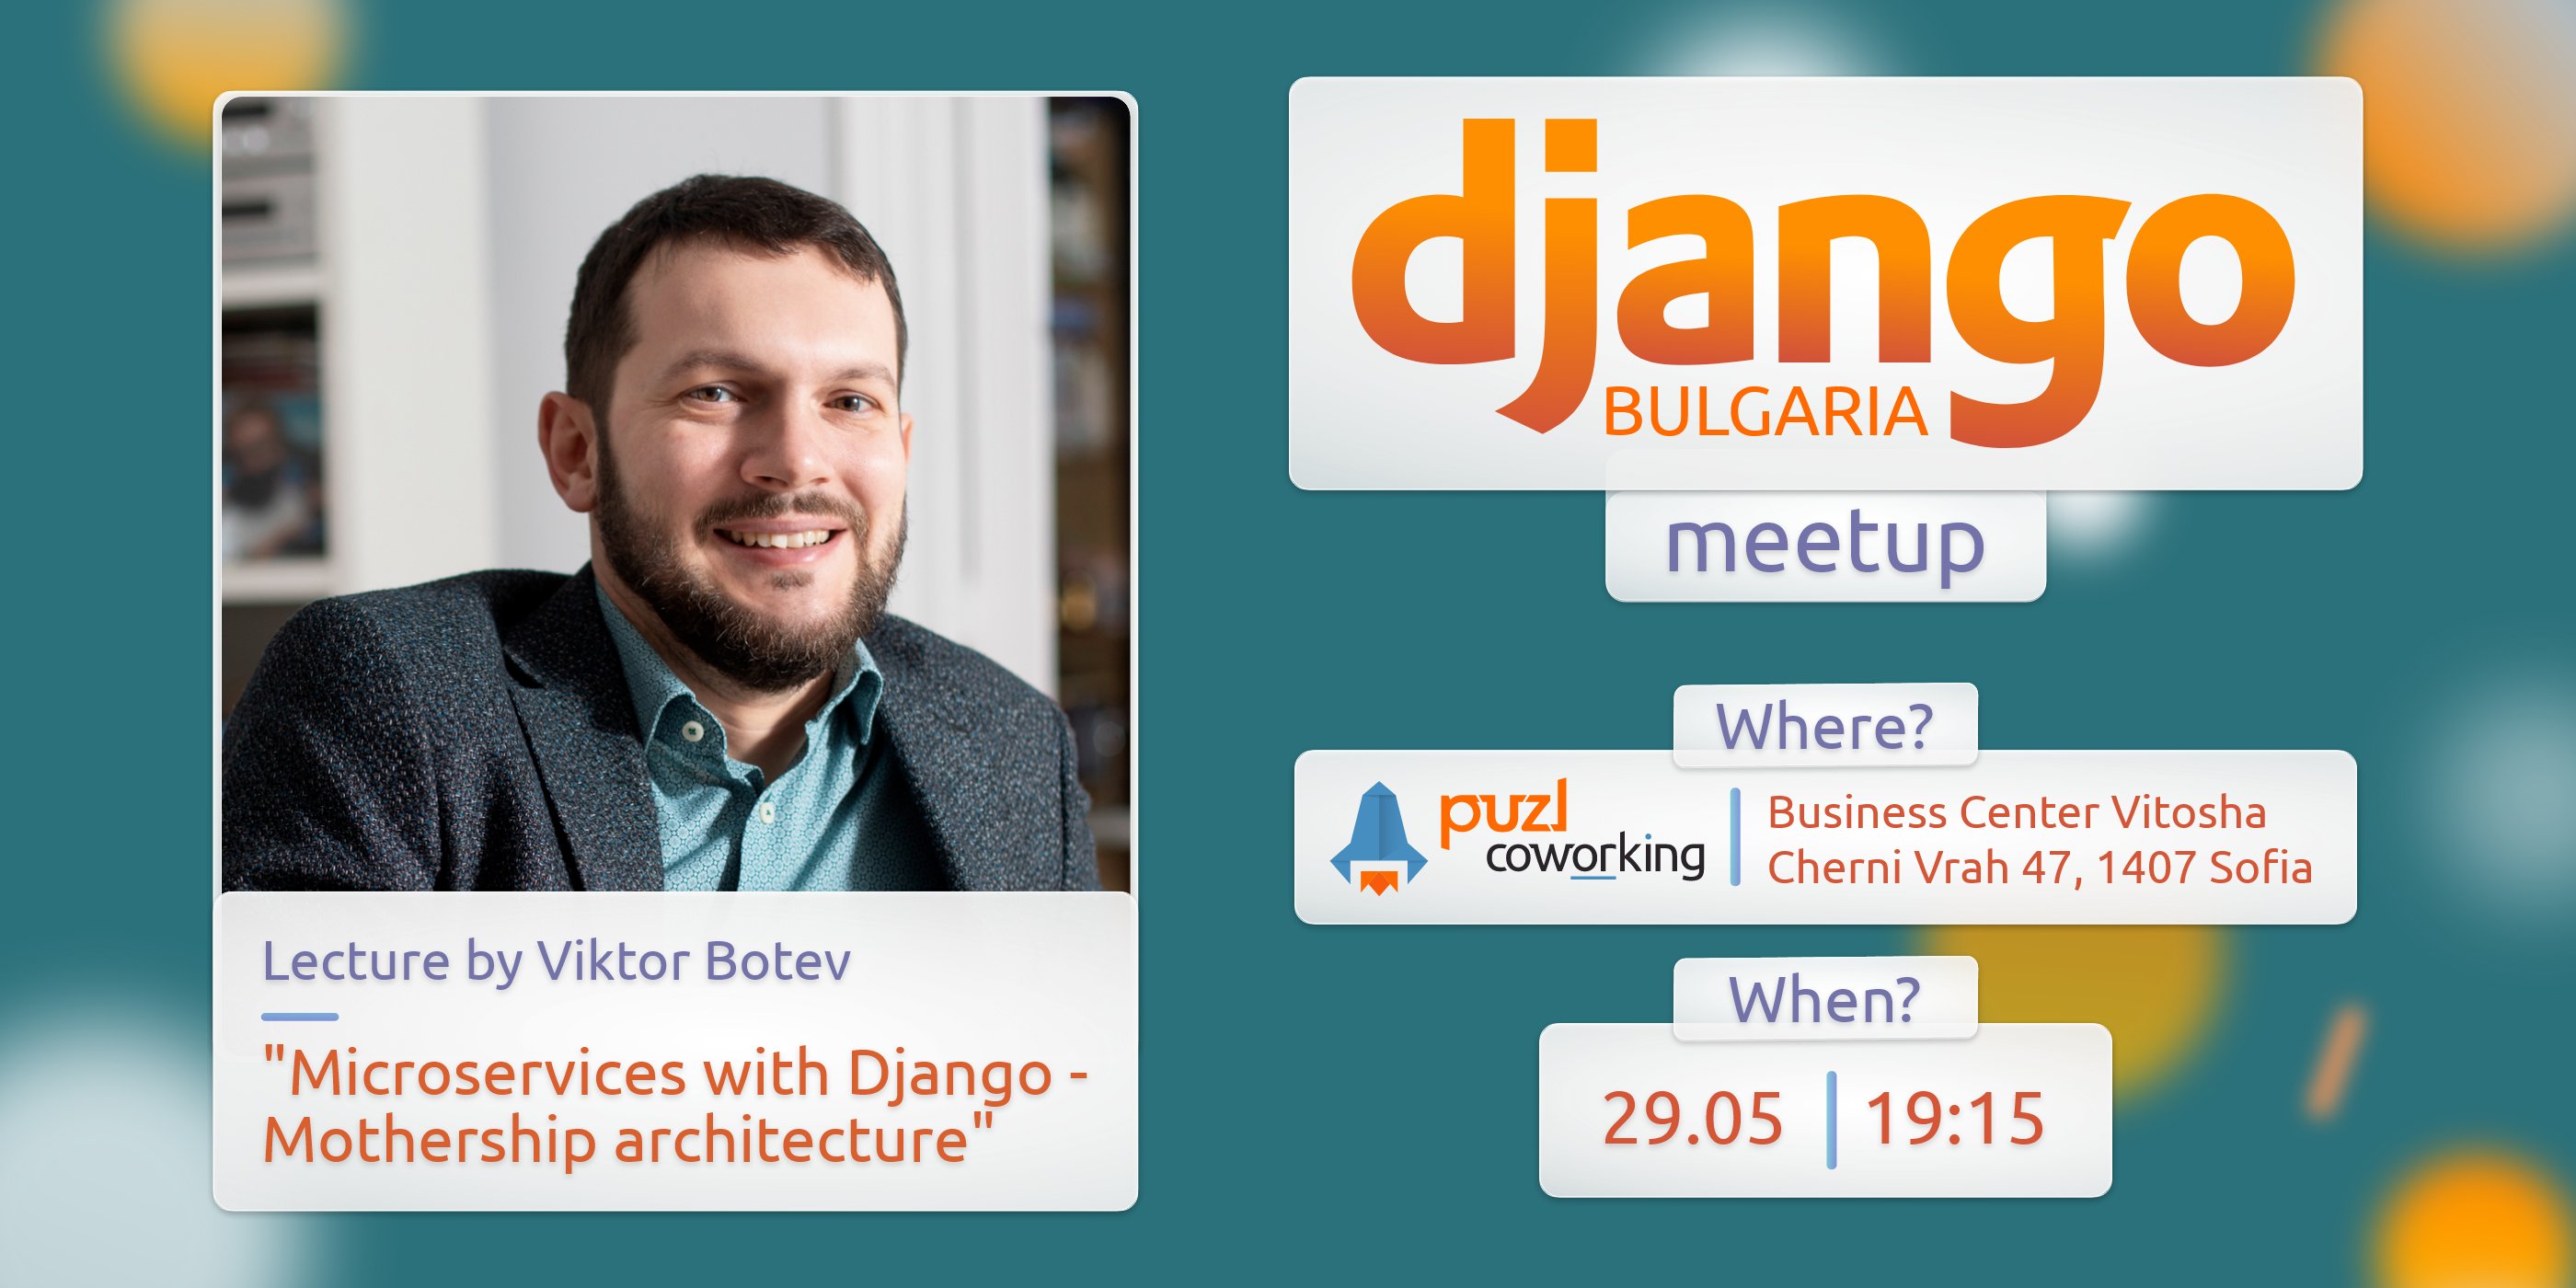 The May edition of Django Bulgaria Meetup in Barter Community Hub / Puzl CowOrKing